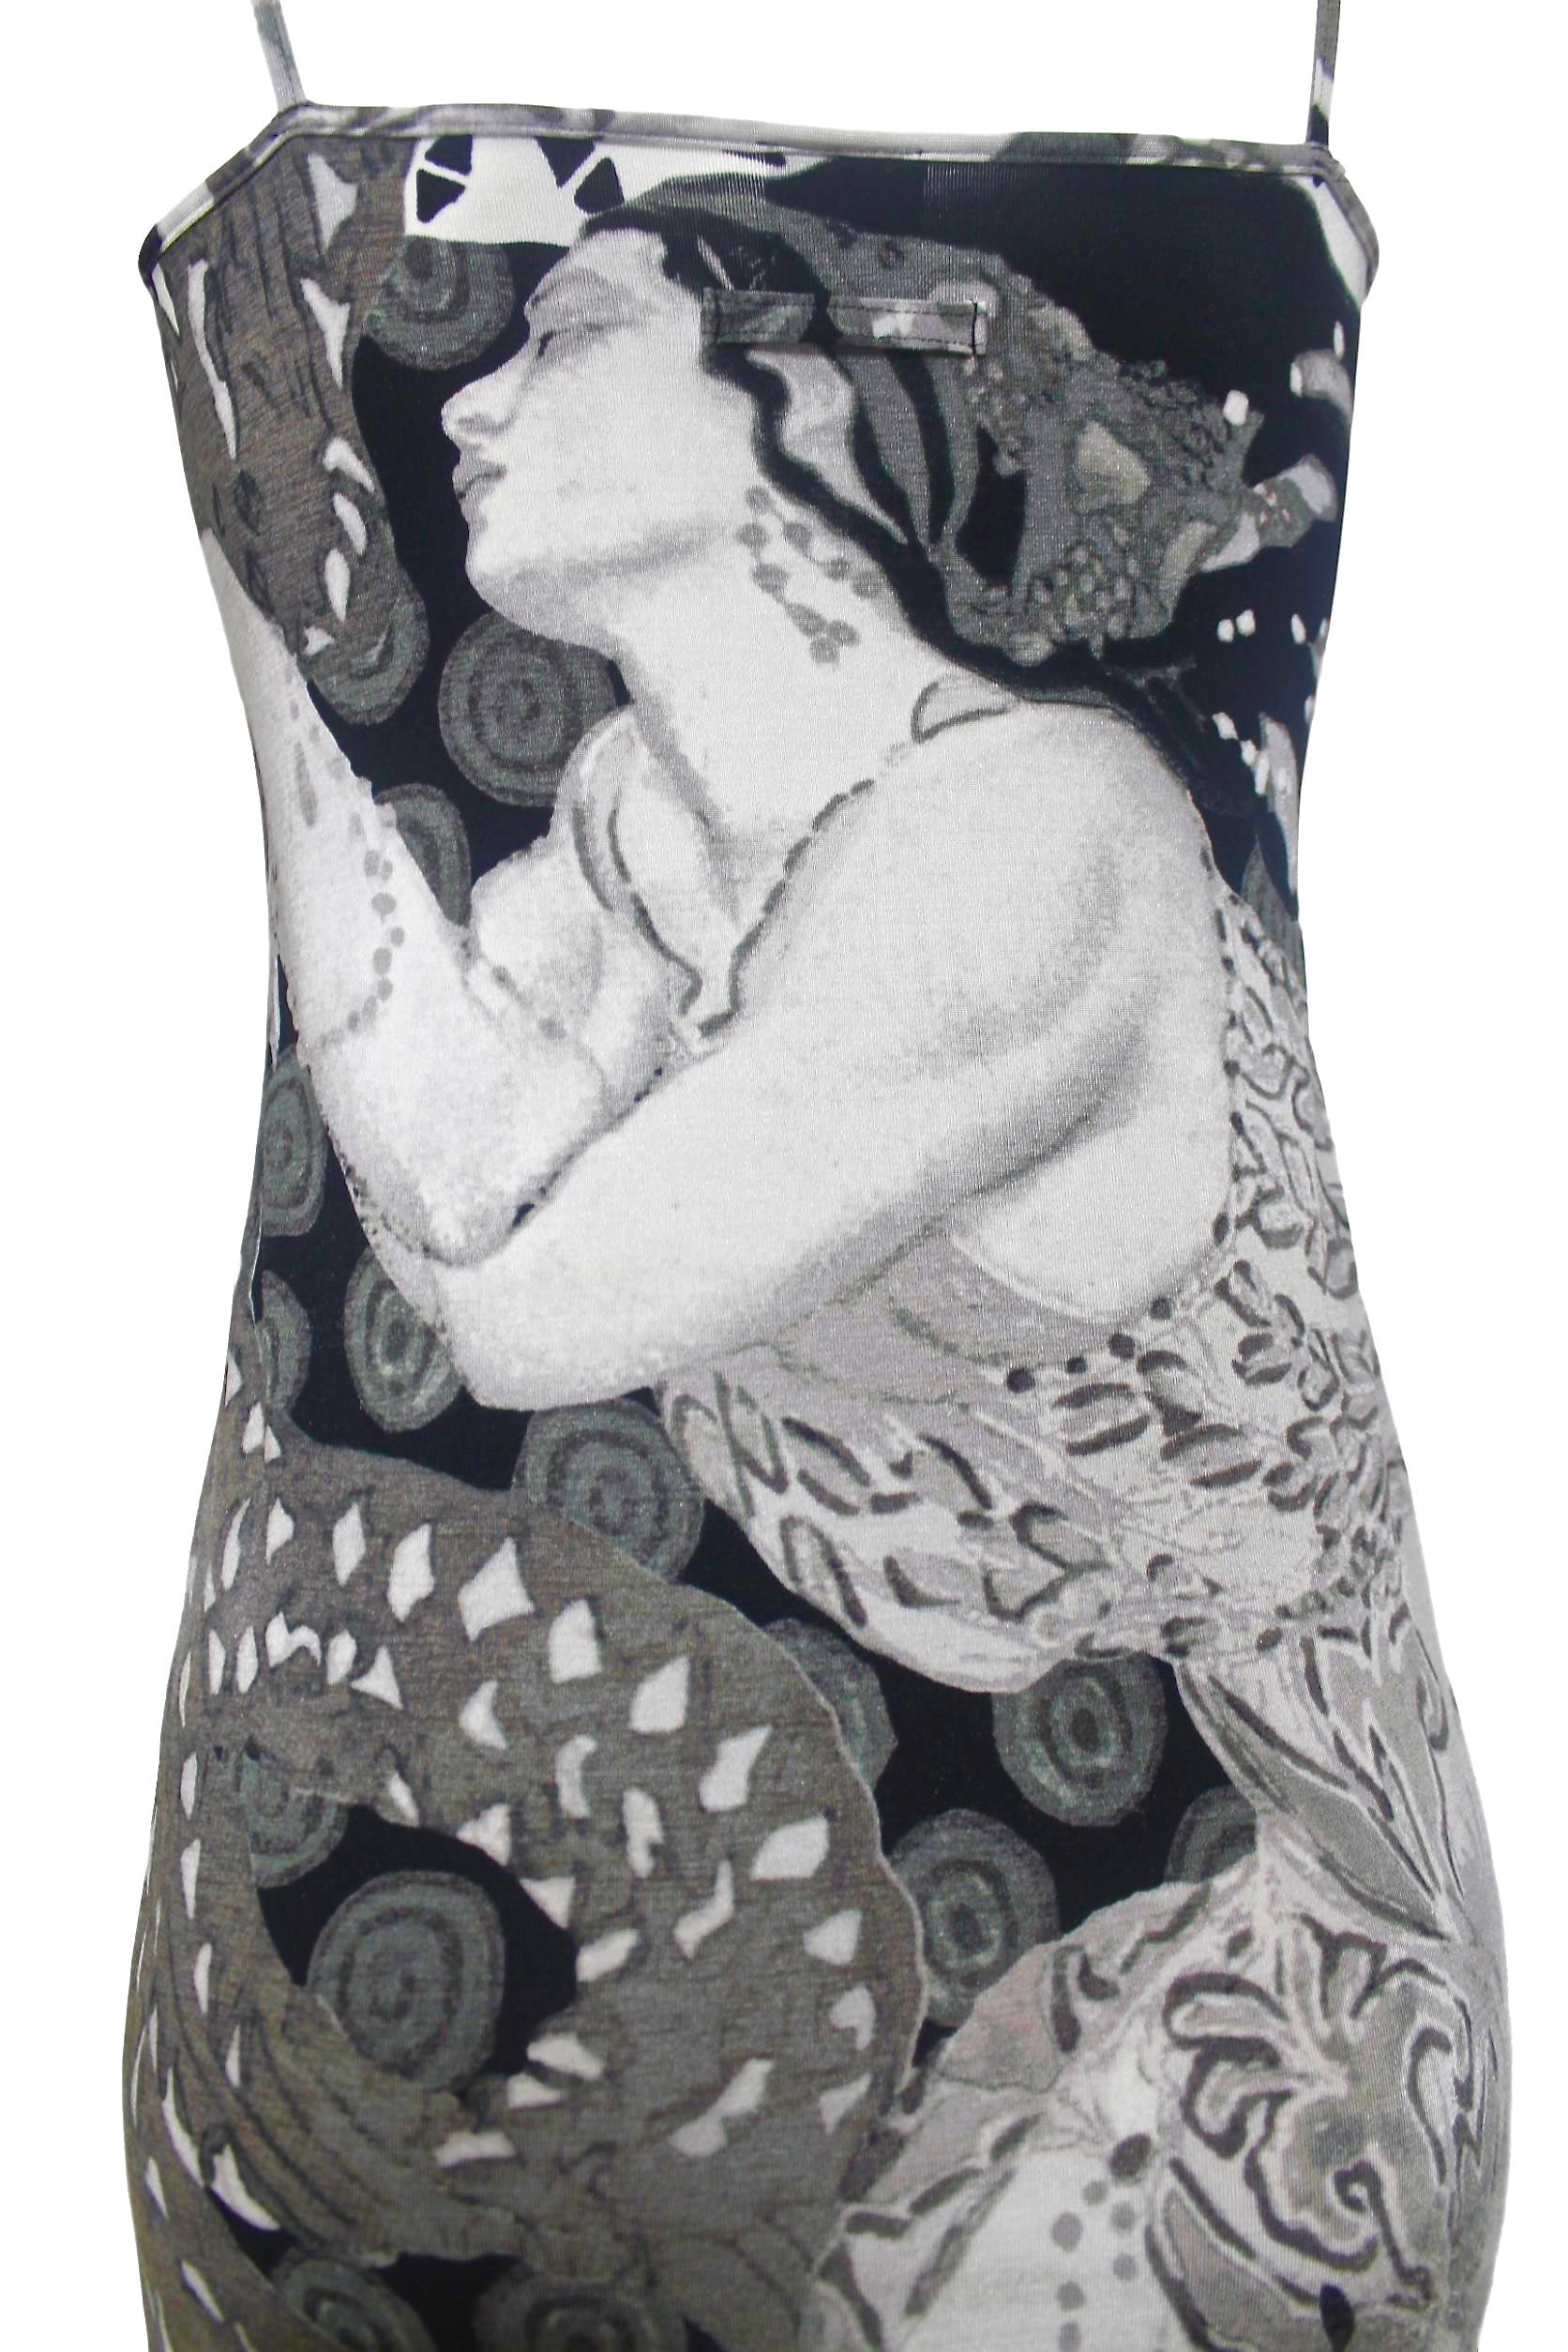 Jean paul Gaultier 'Erte' Print Summer Slip Dress For Sale 2